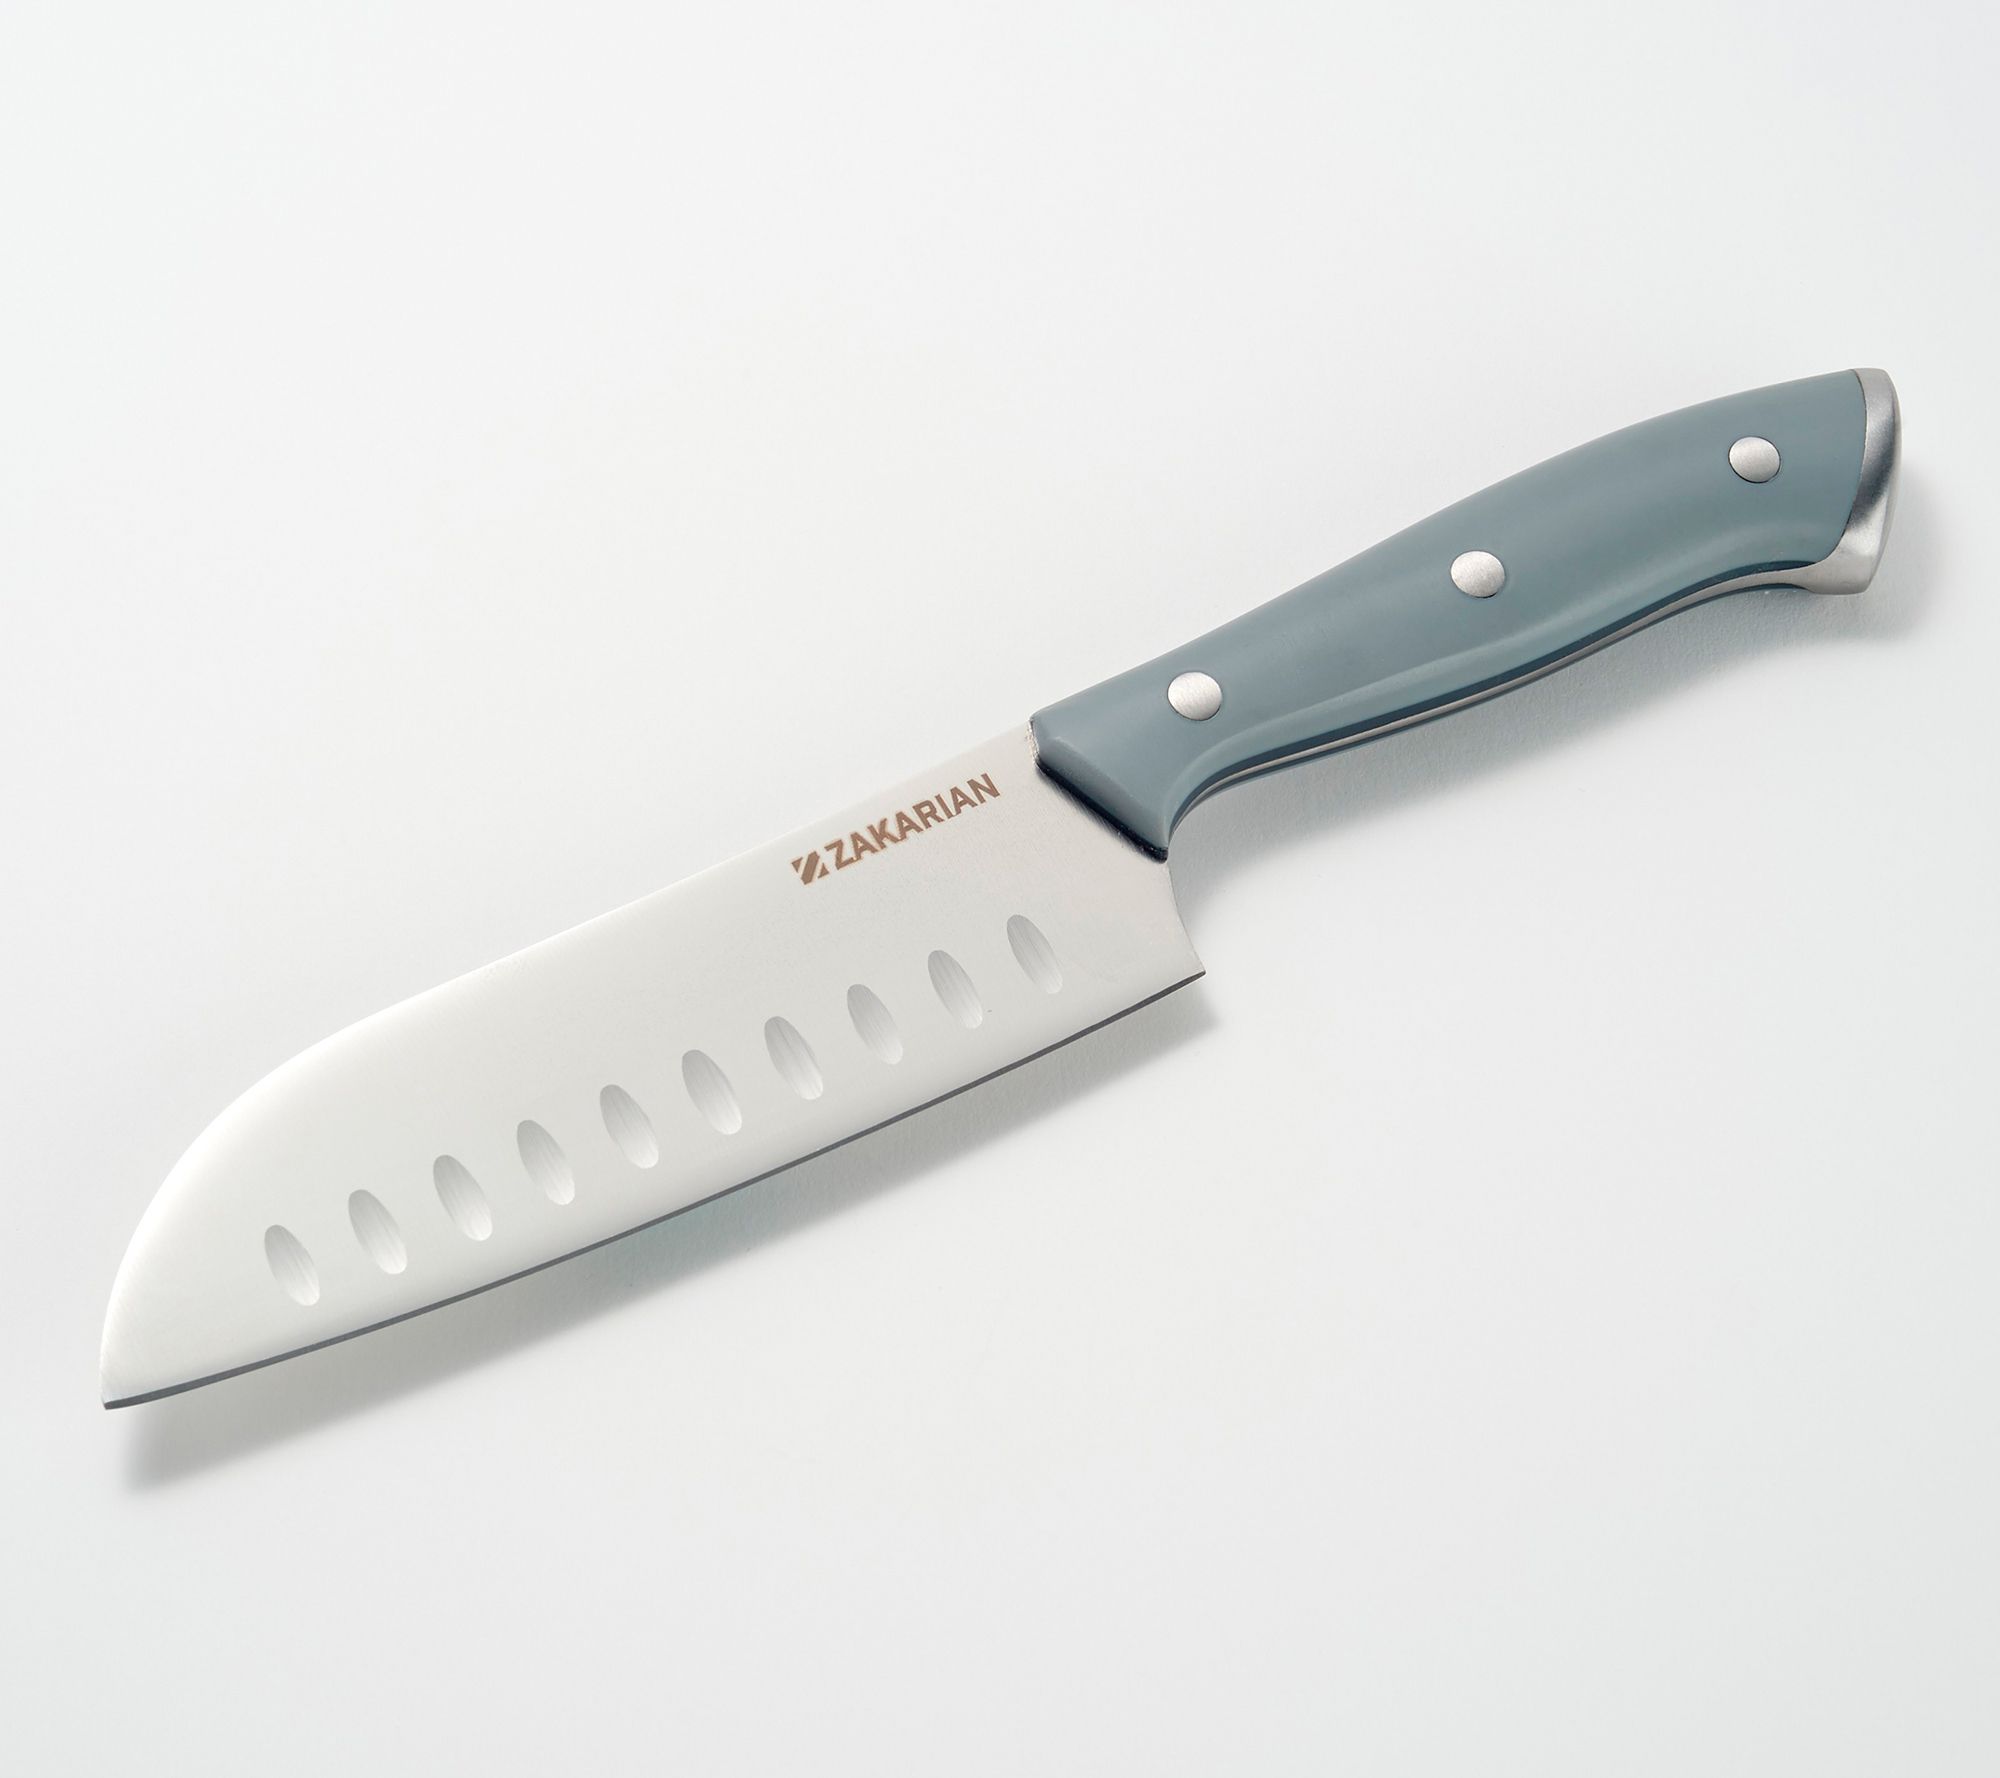  MAD SHARK Knife Set, Professional 5 Piece Kitchen Chef